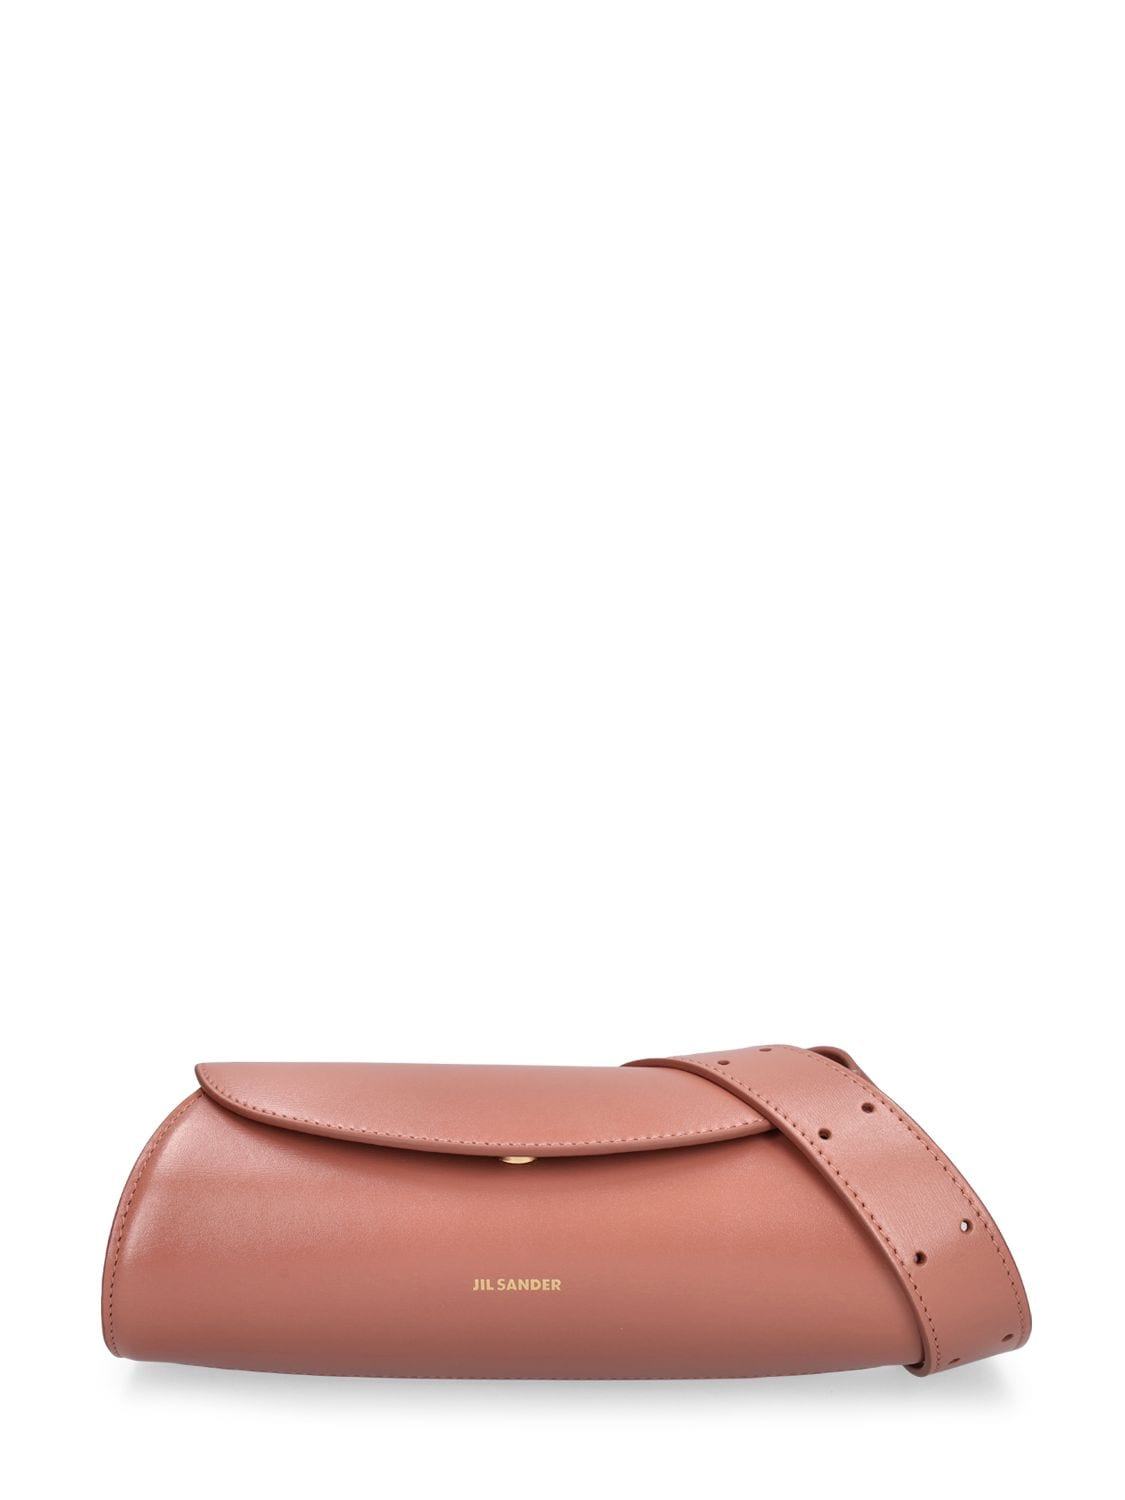 Image of Mini Cannolo Leather Shoulder Bag